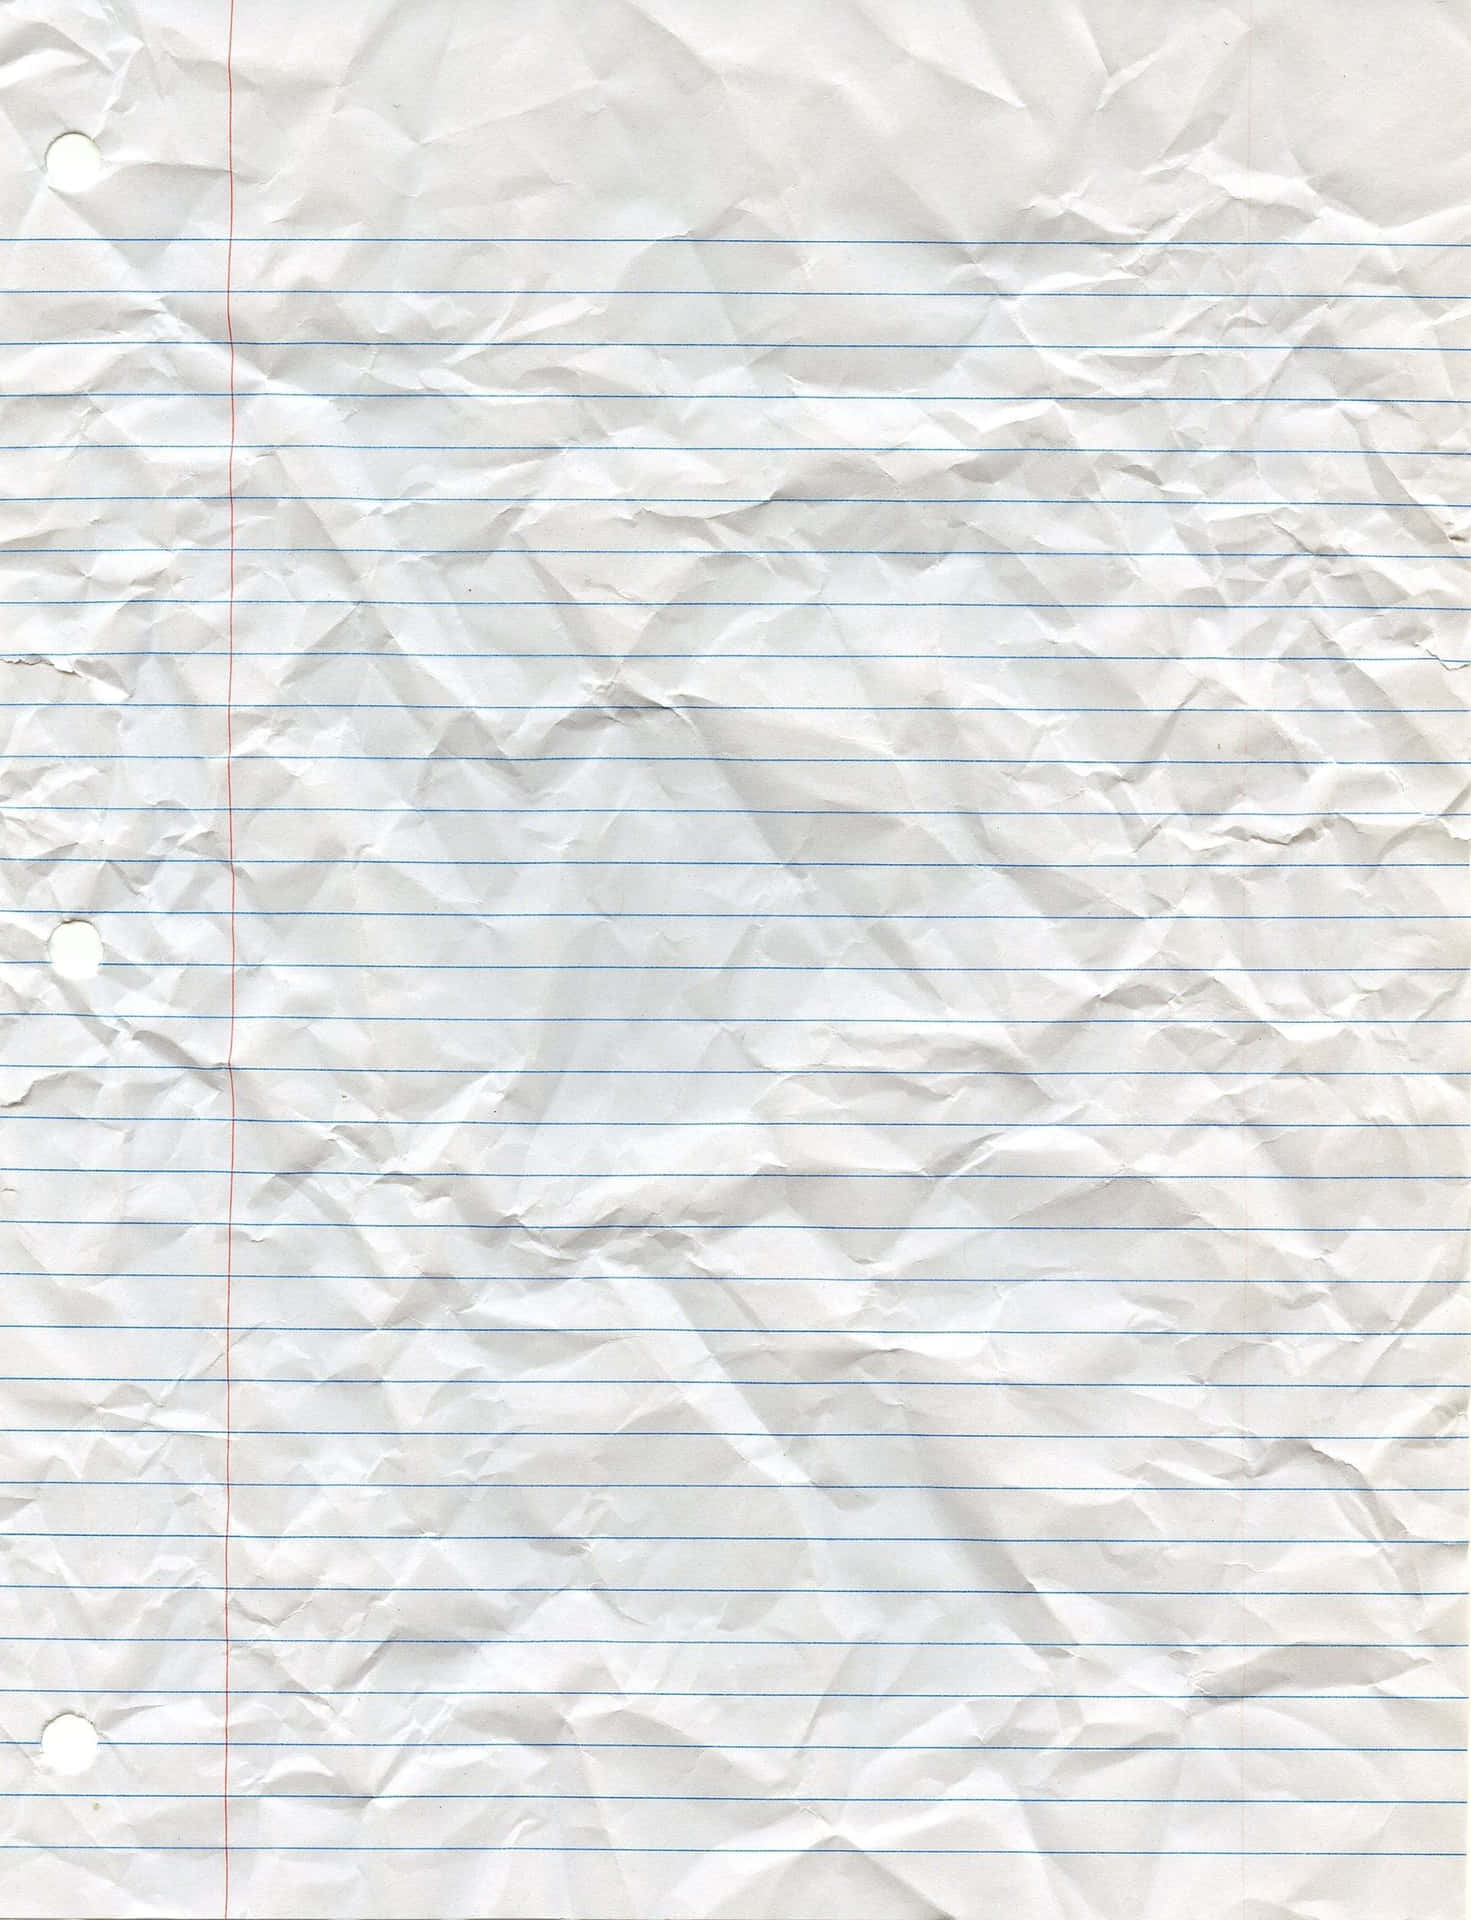 Wrinkled Notebook Paper Background